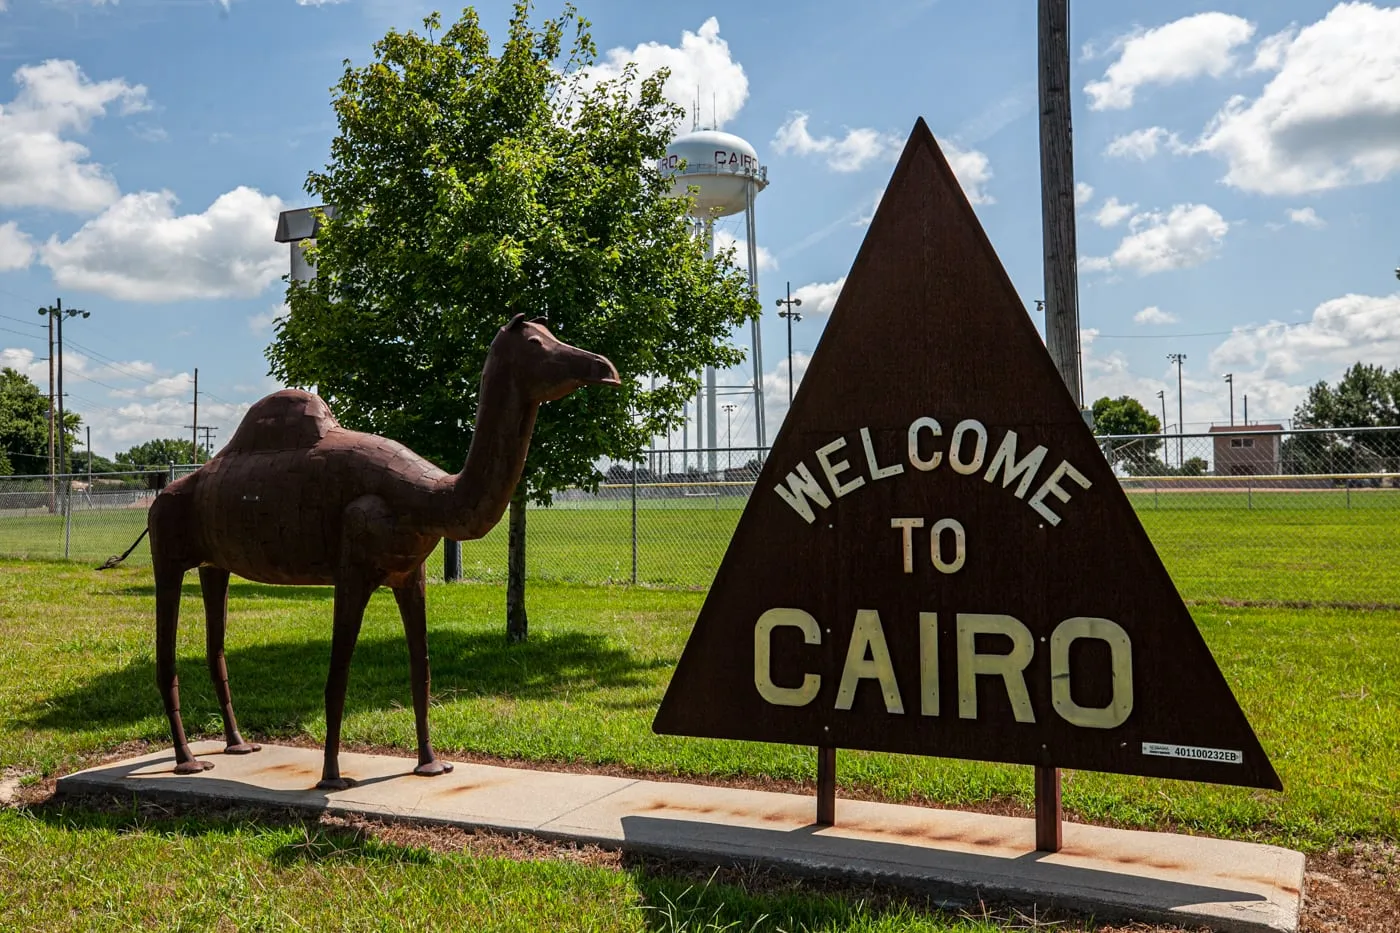 Camel and Pyramid in Cairo, Nebraska | Welcome to Cairo Sign | Roadside Attractions in Nebraska